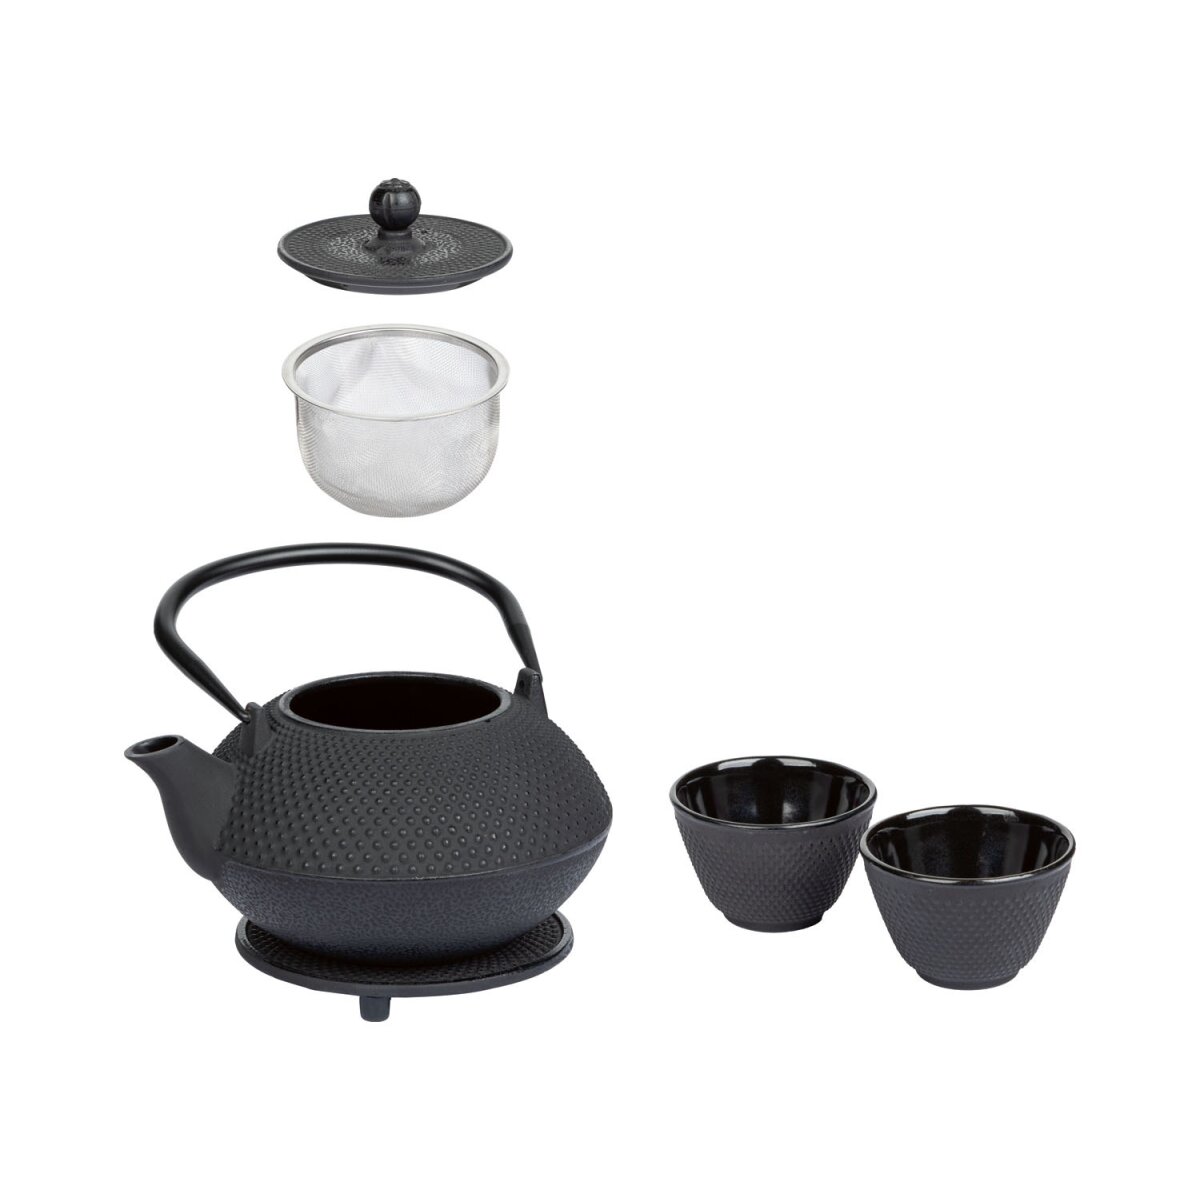 ERNESTO® Gusseisen-Tee-Set, 4-teilig, mit herausnehmbarem Teefilter -  B-Ware sehr gut, 20,99 €